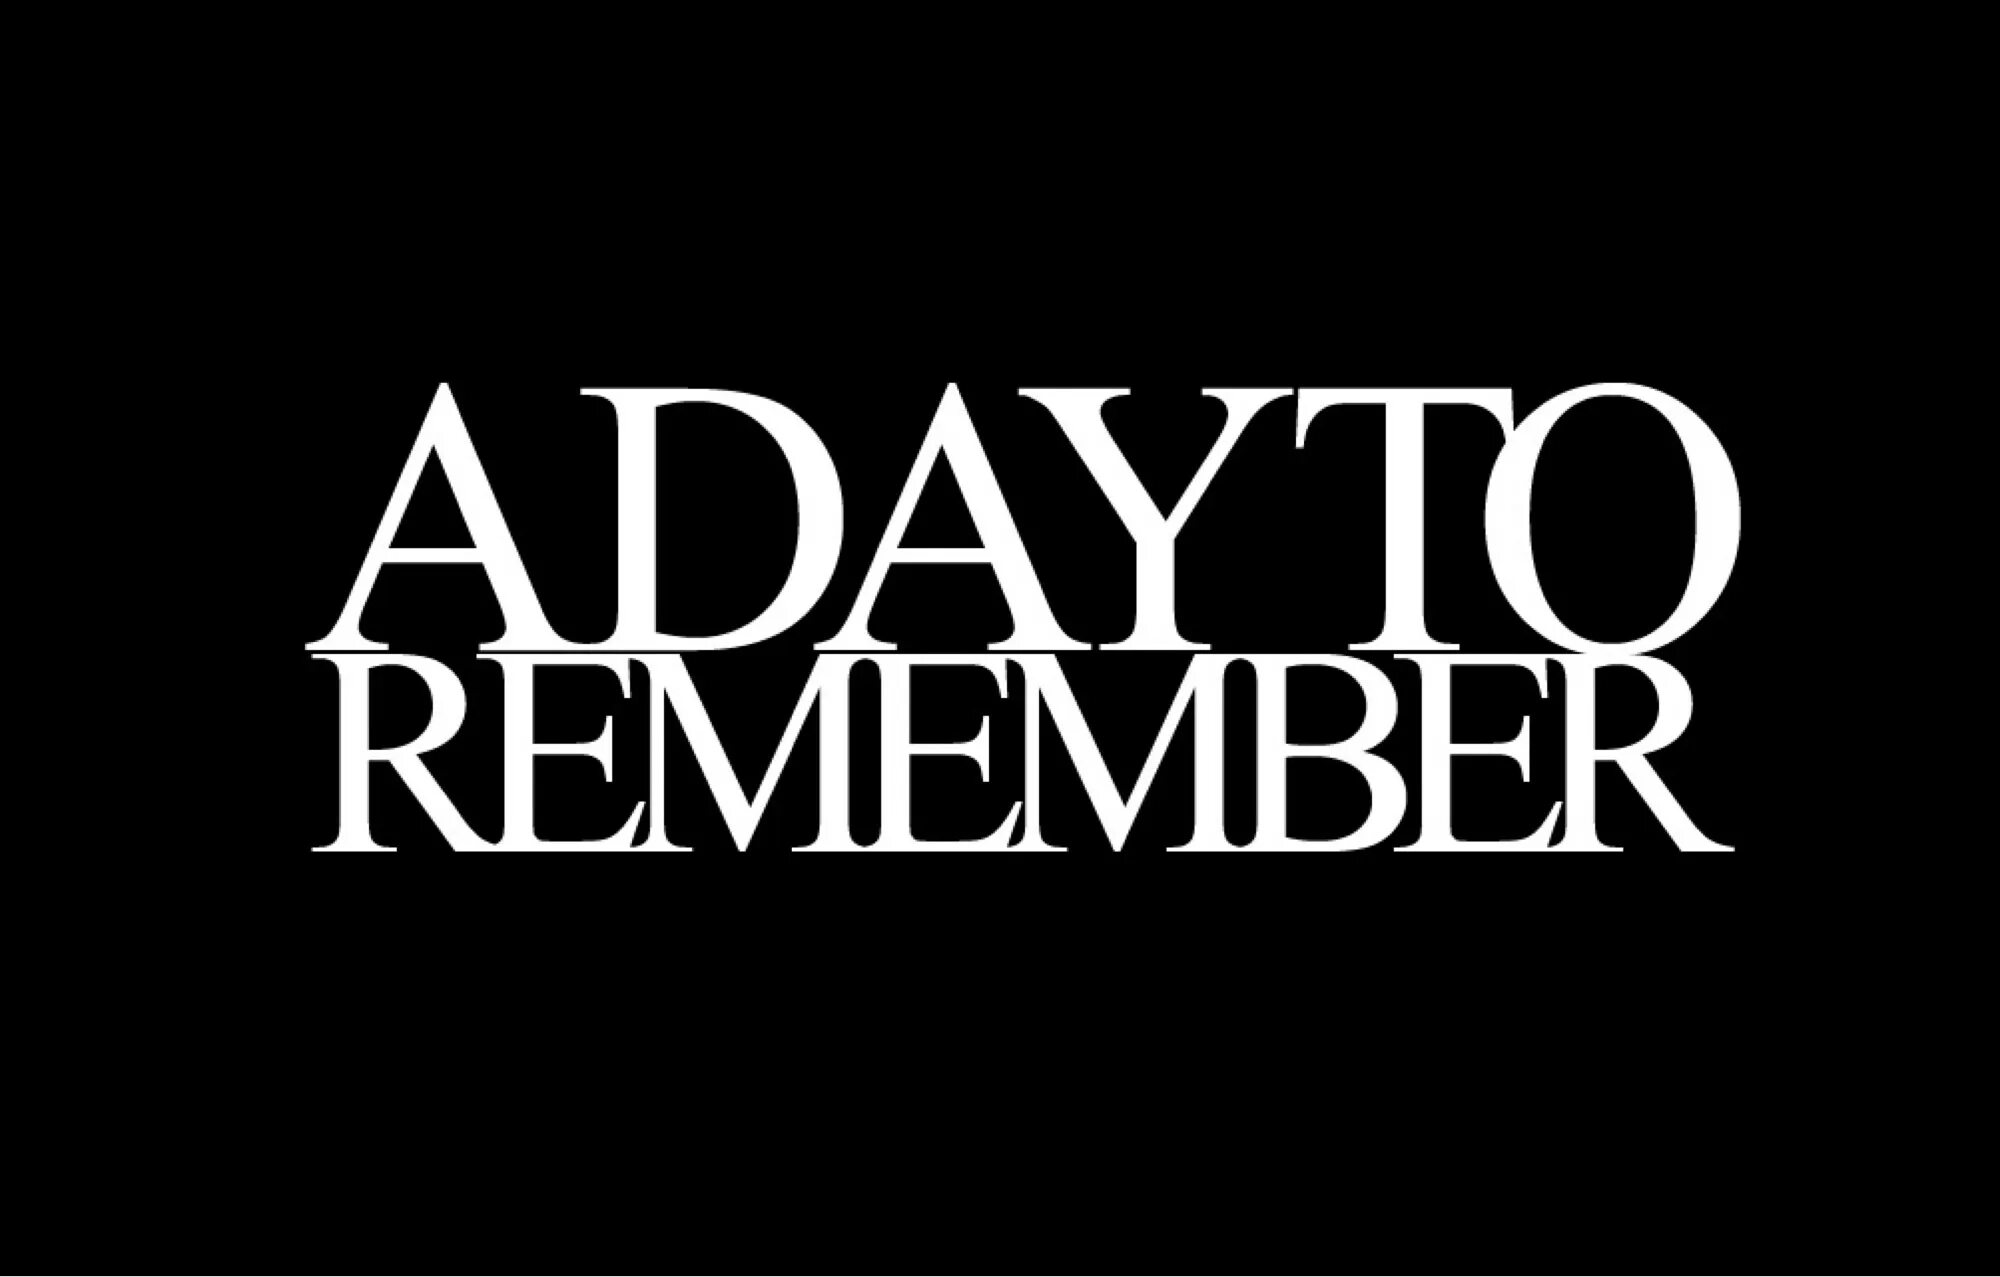 Holiday to remember. Картинка remember. A Day to remember логотип. A Day to remember for those who have Heart. A Day to remember обложка.